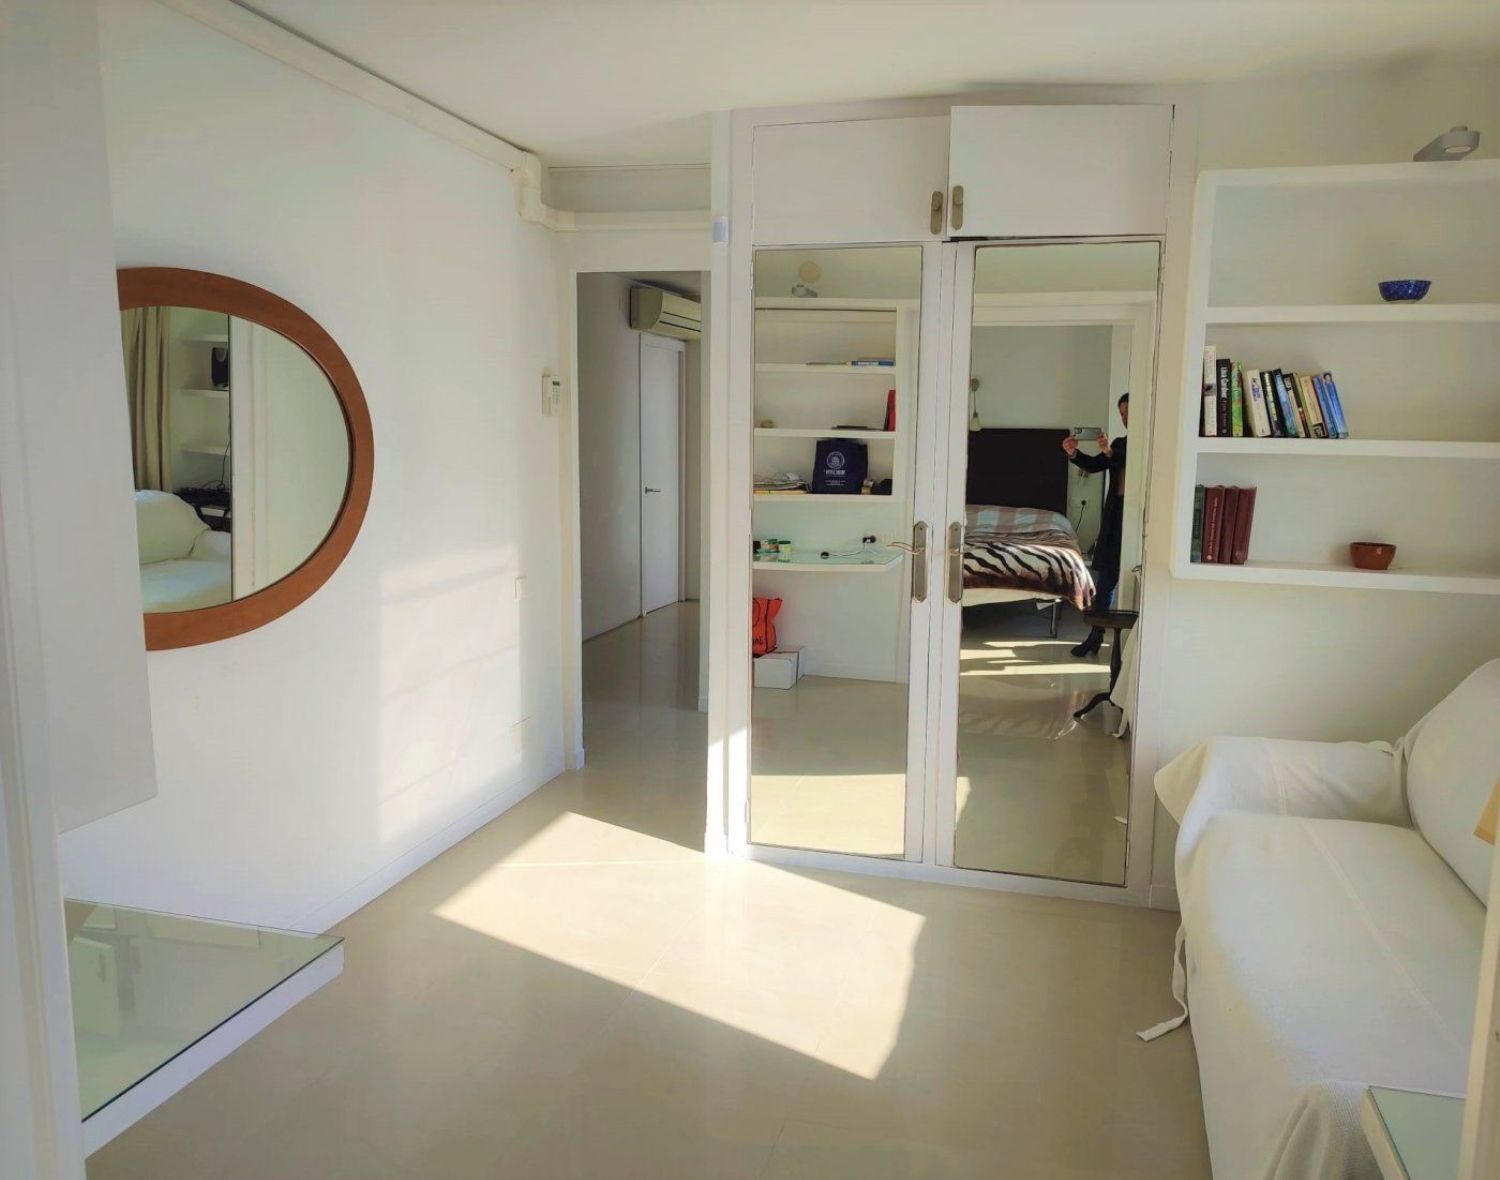 Apartment for sale on the seafront in l'Albufeta, in Alicante